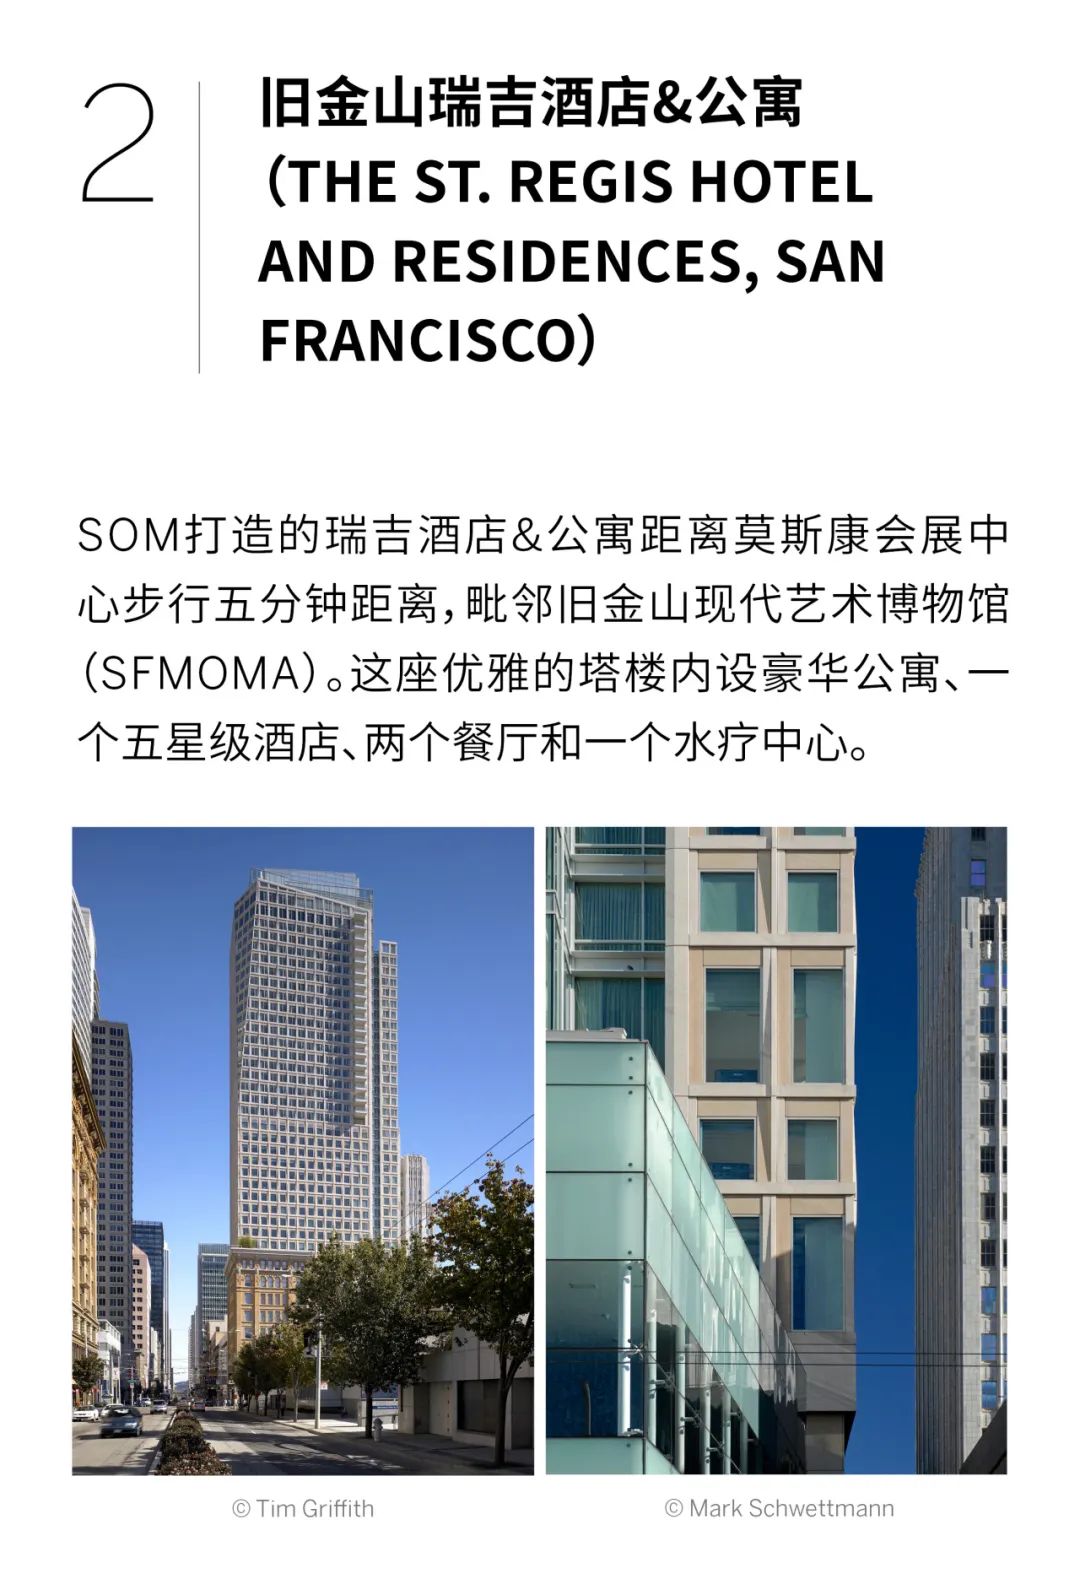 SOM设计揭秘 | 2023年旧金山APEC峰会主场馆抢先看！